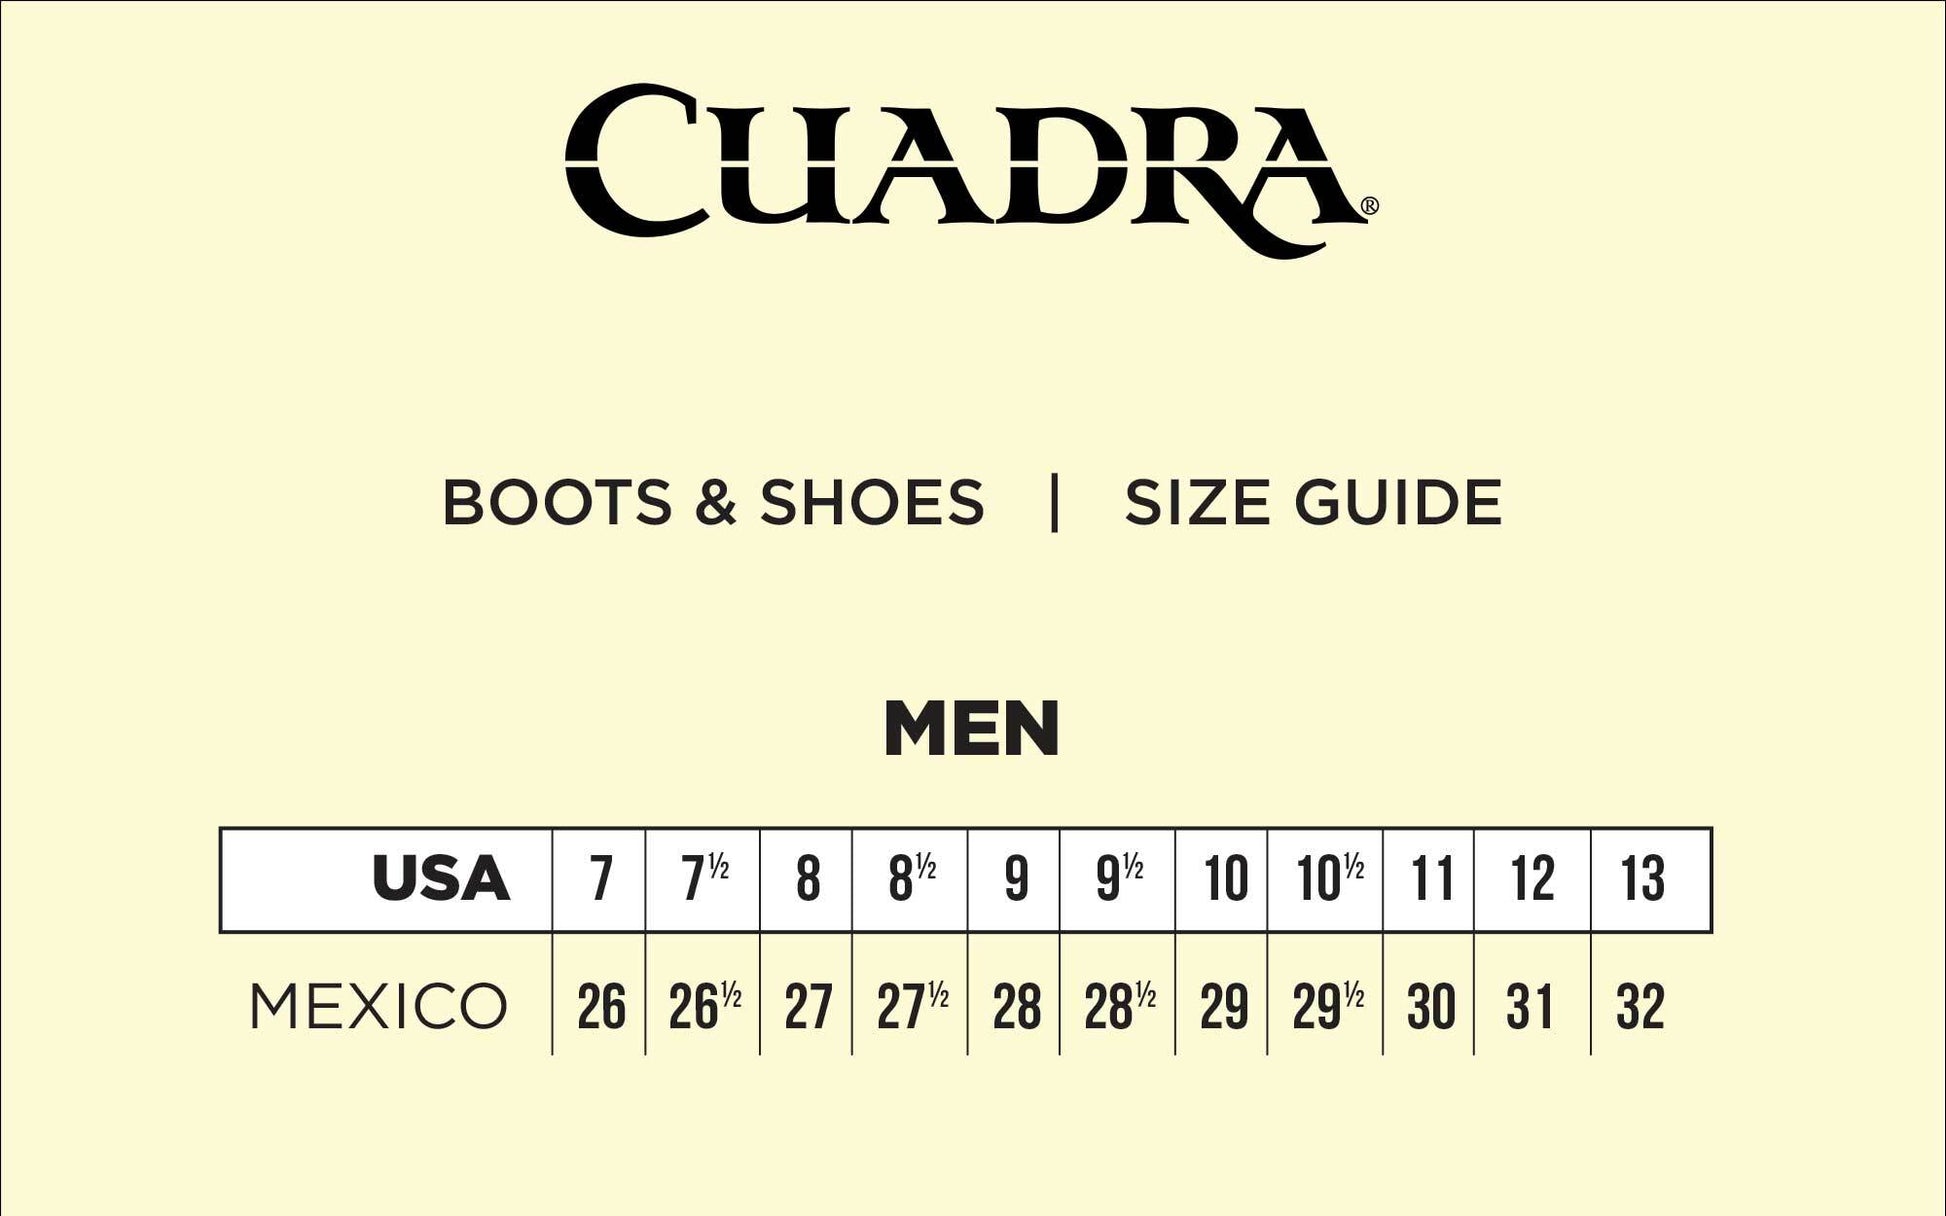 Cuadra's men boots size guide